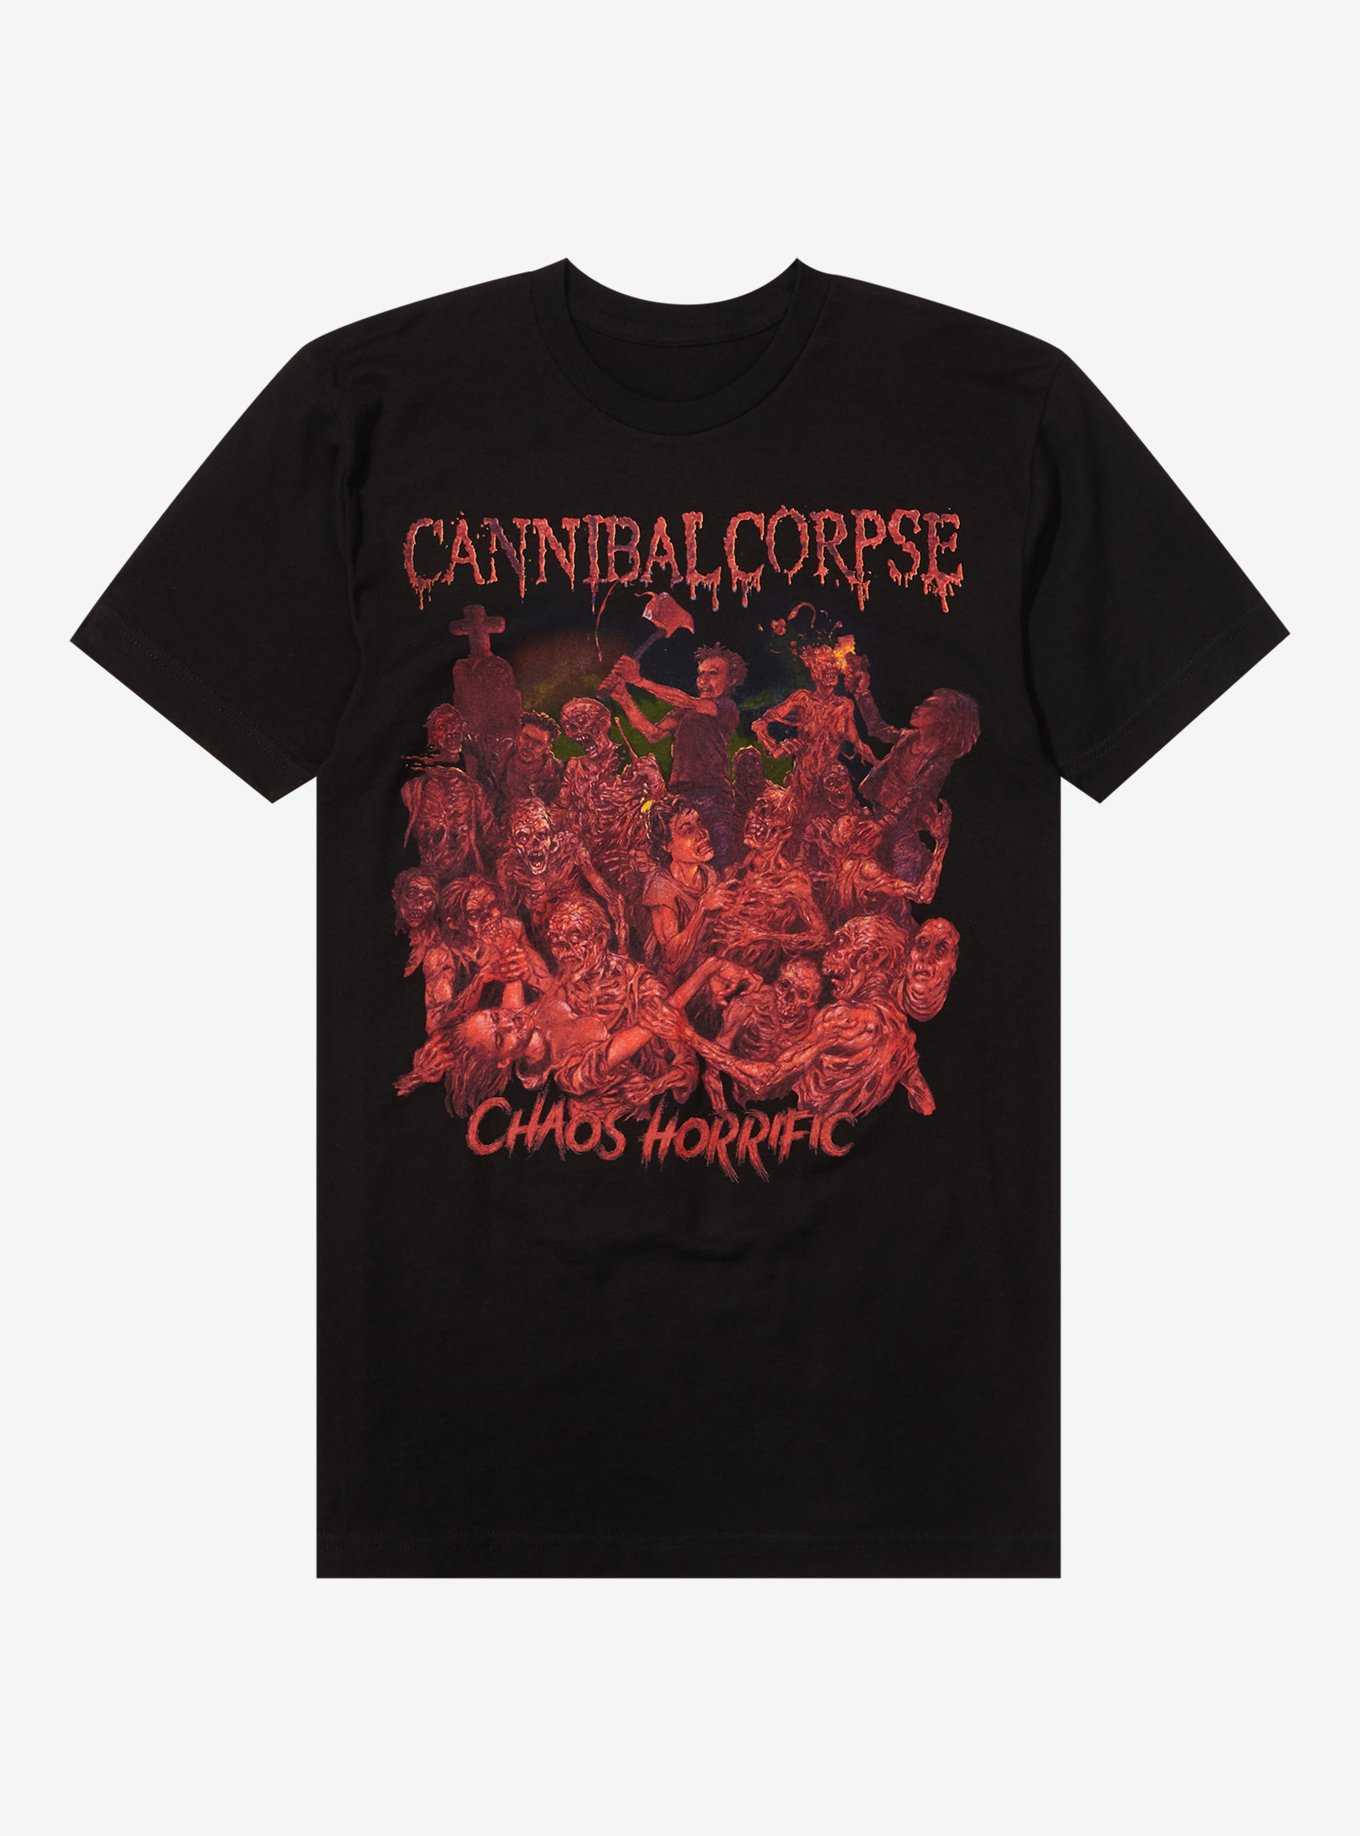 Cannibal Corpse Chaos Horrific T-Shirt